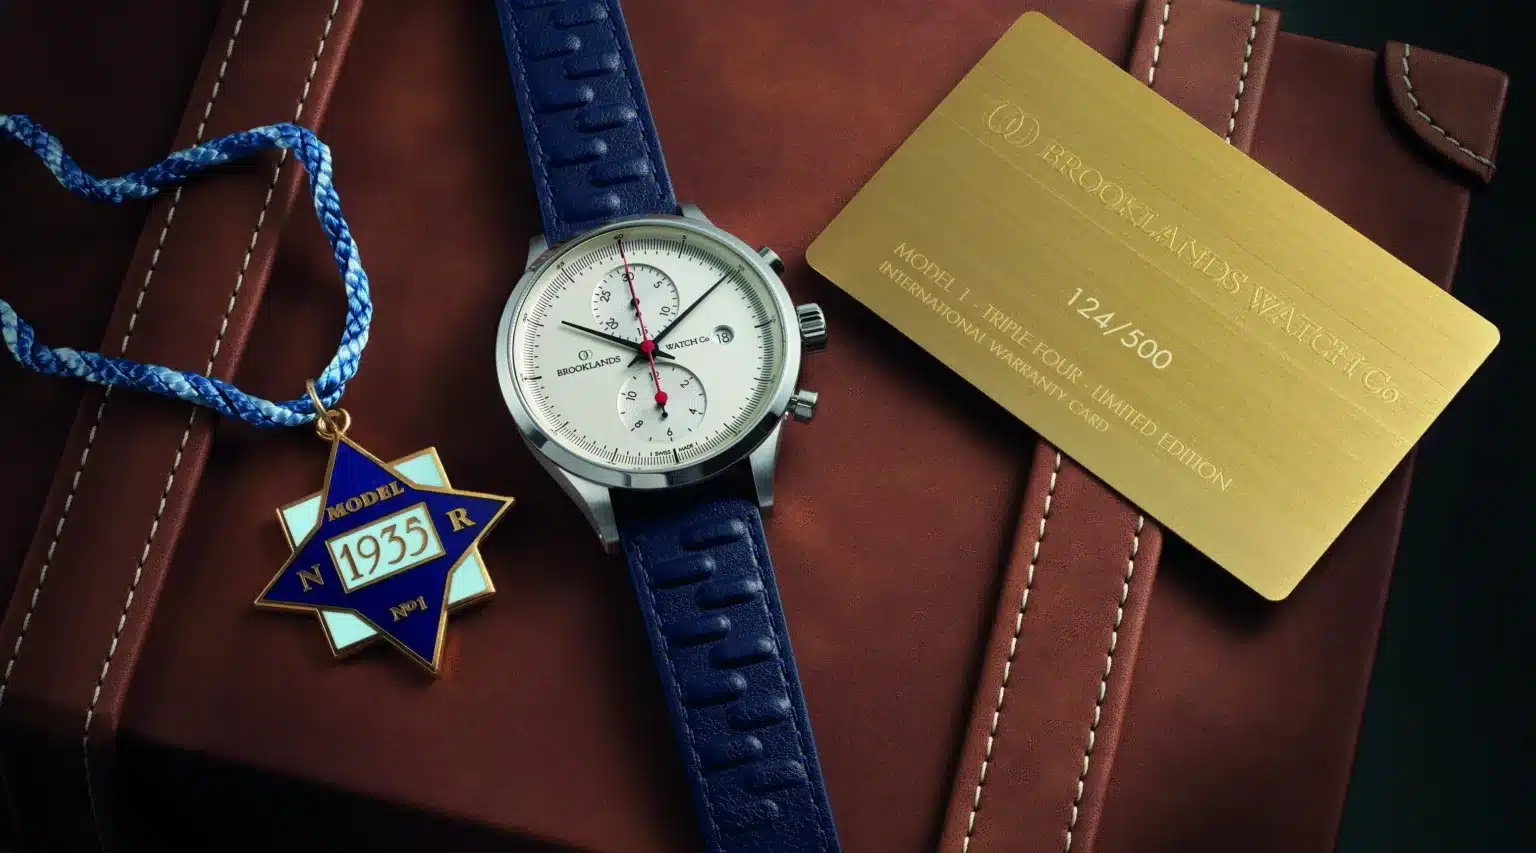 Triple Four Chronograph W Warranty, Members Badge, Brooklands Watch Company